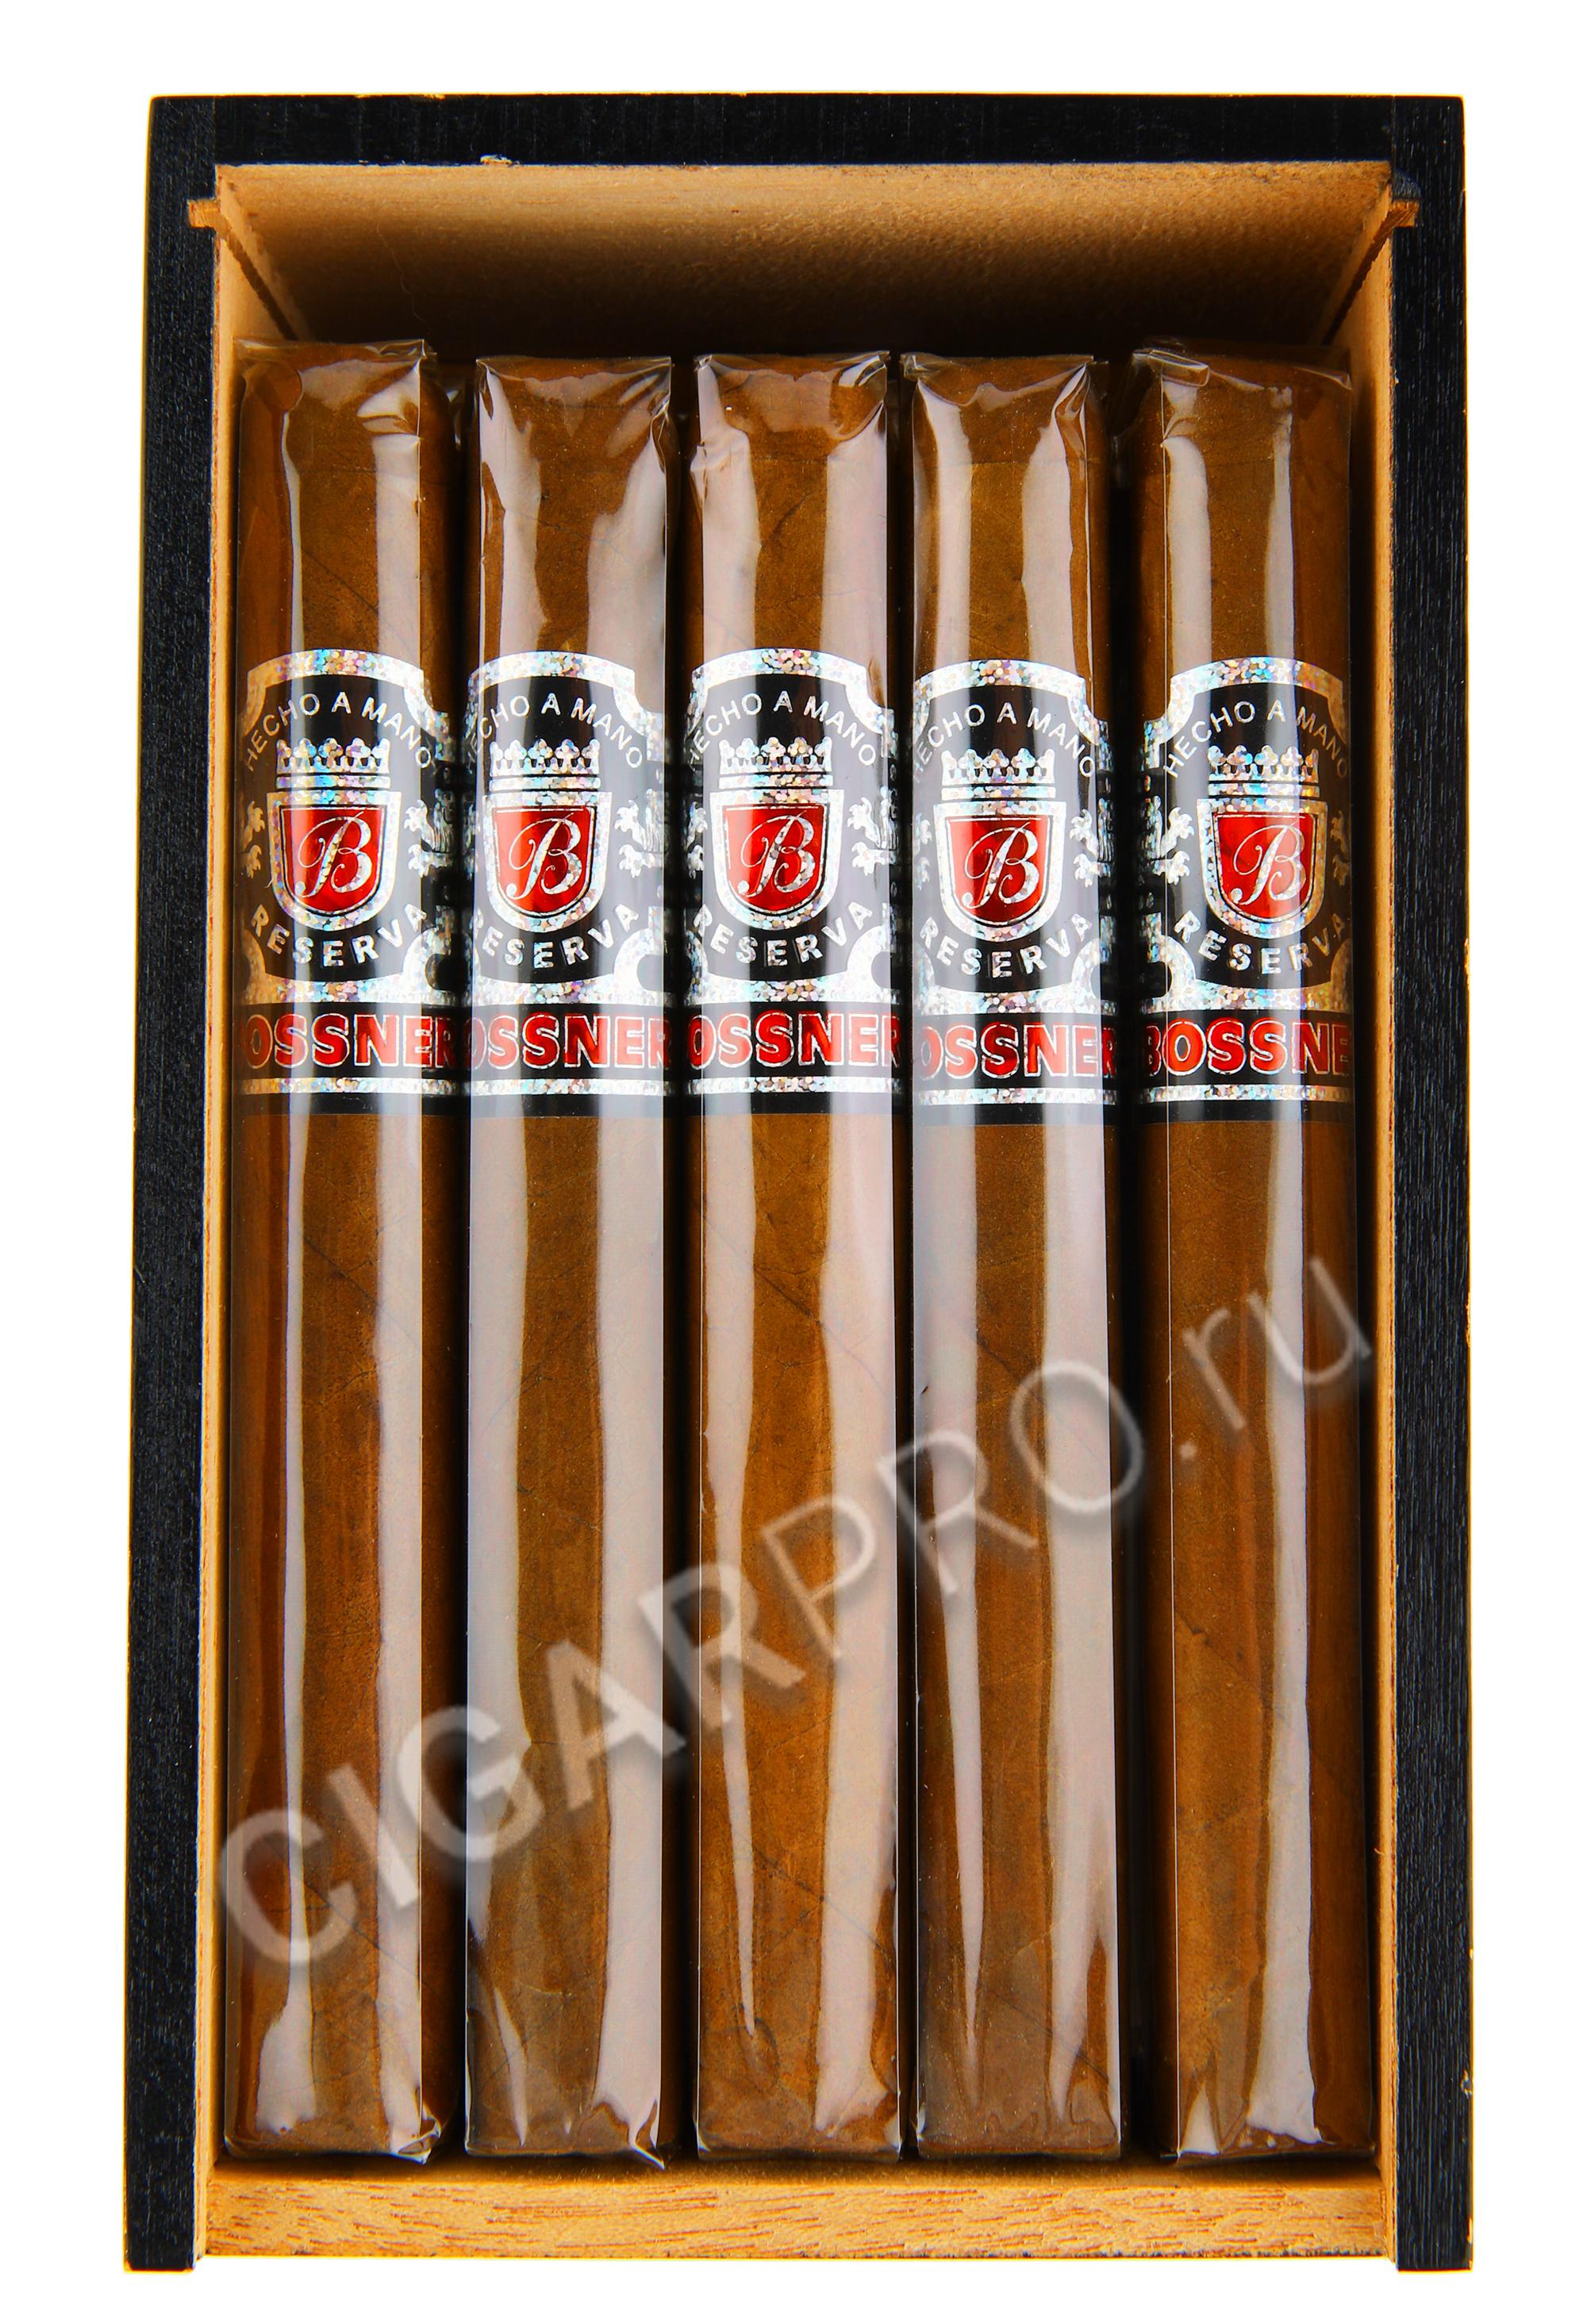 Сигарпро. Bossner сигары. Bossner Limited Edition 2005.